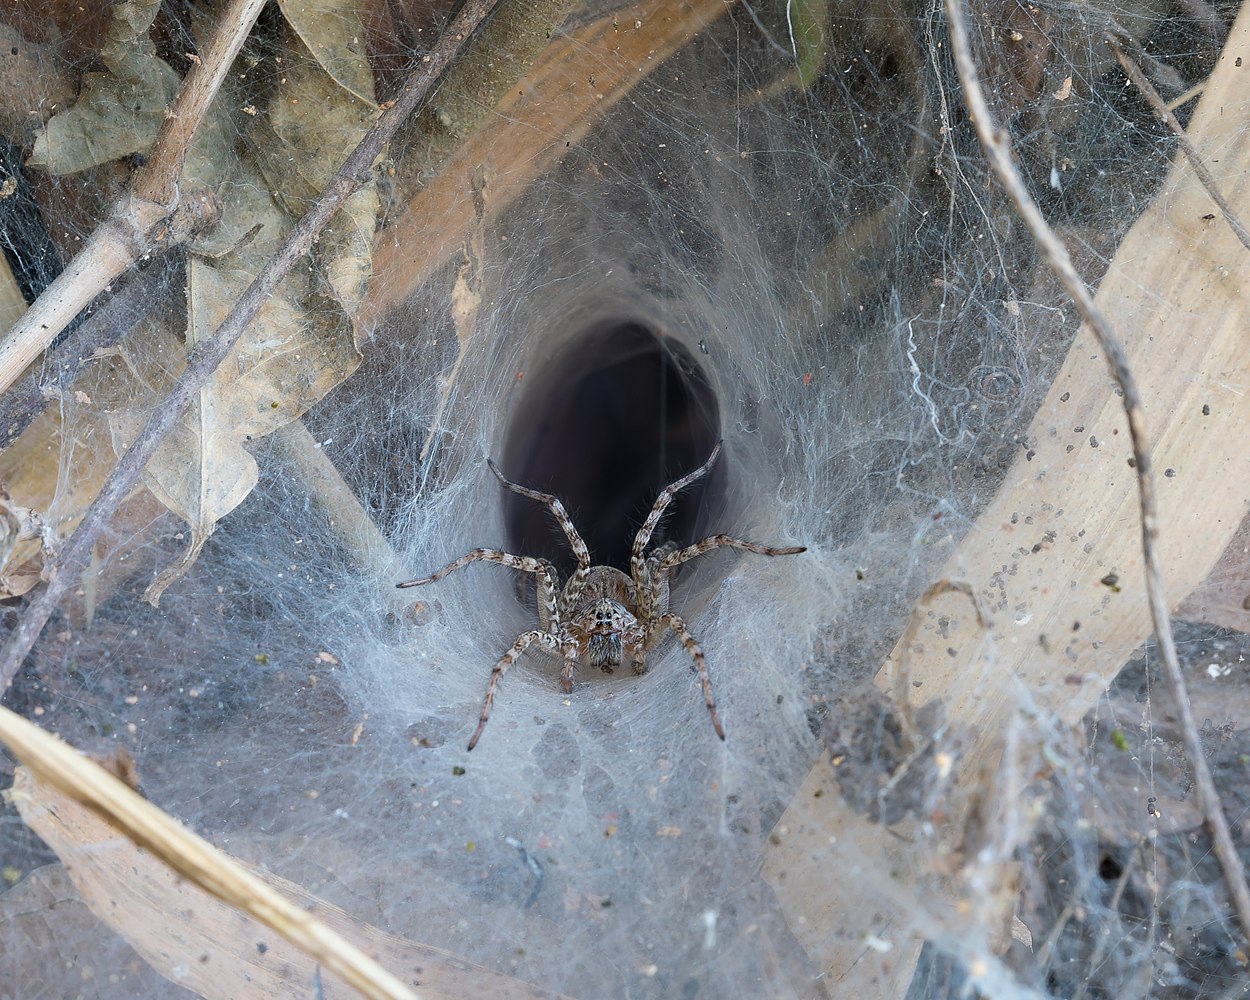  Hippasa holmerae (Lawn wolf spider) in its funnel web